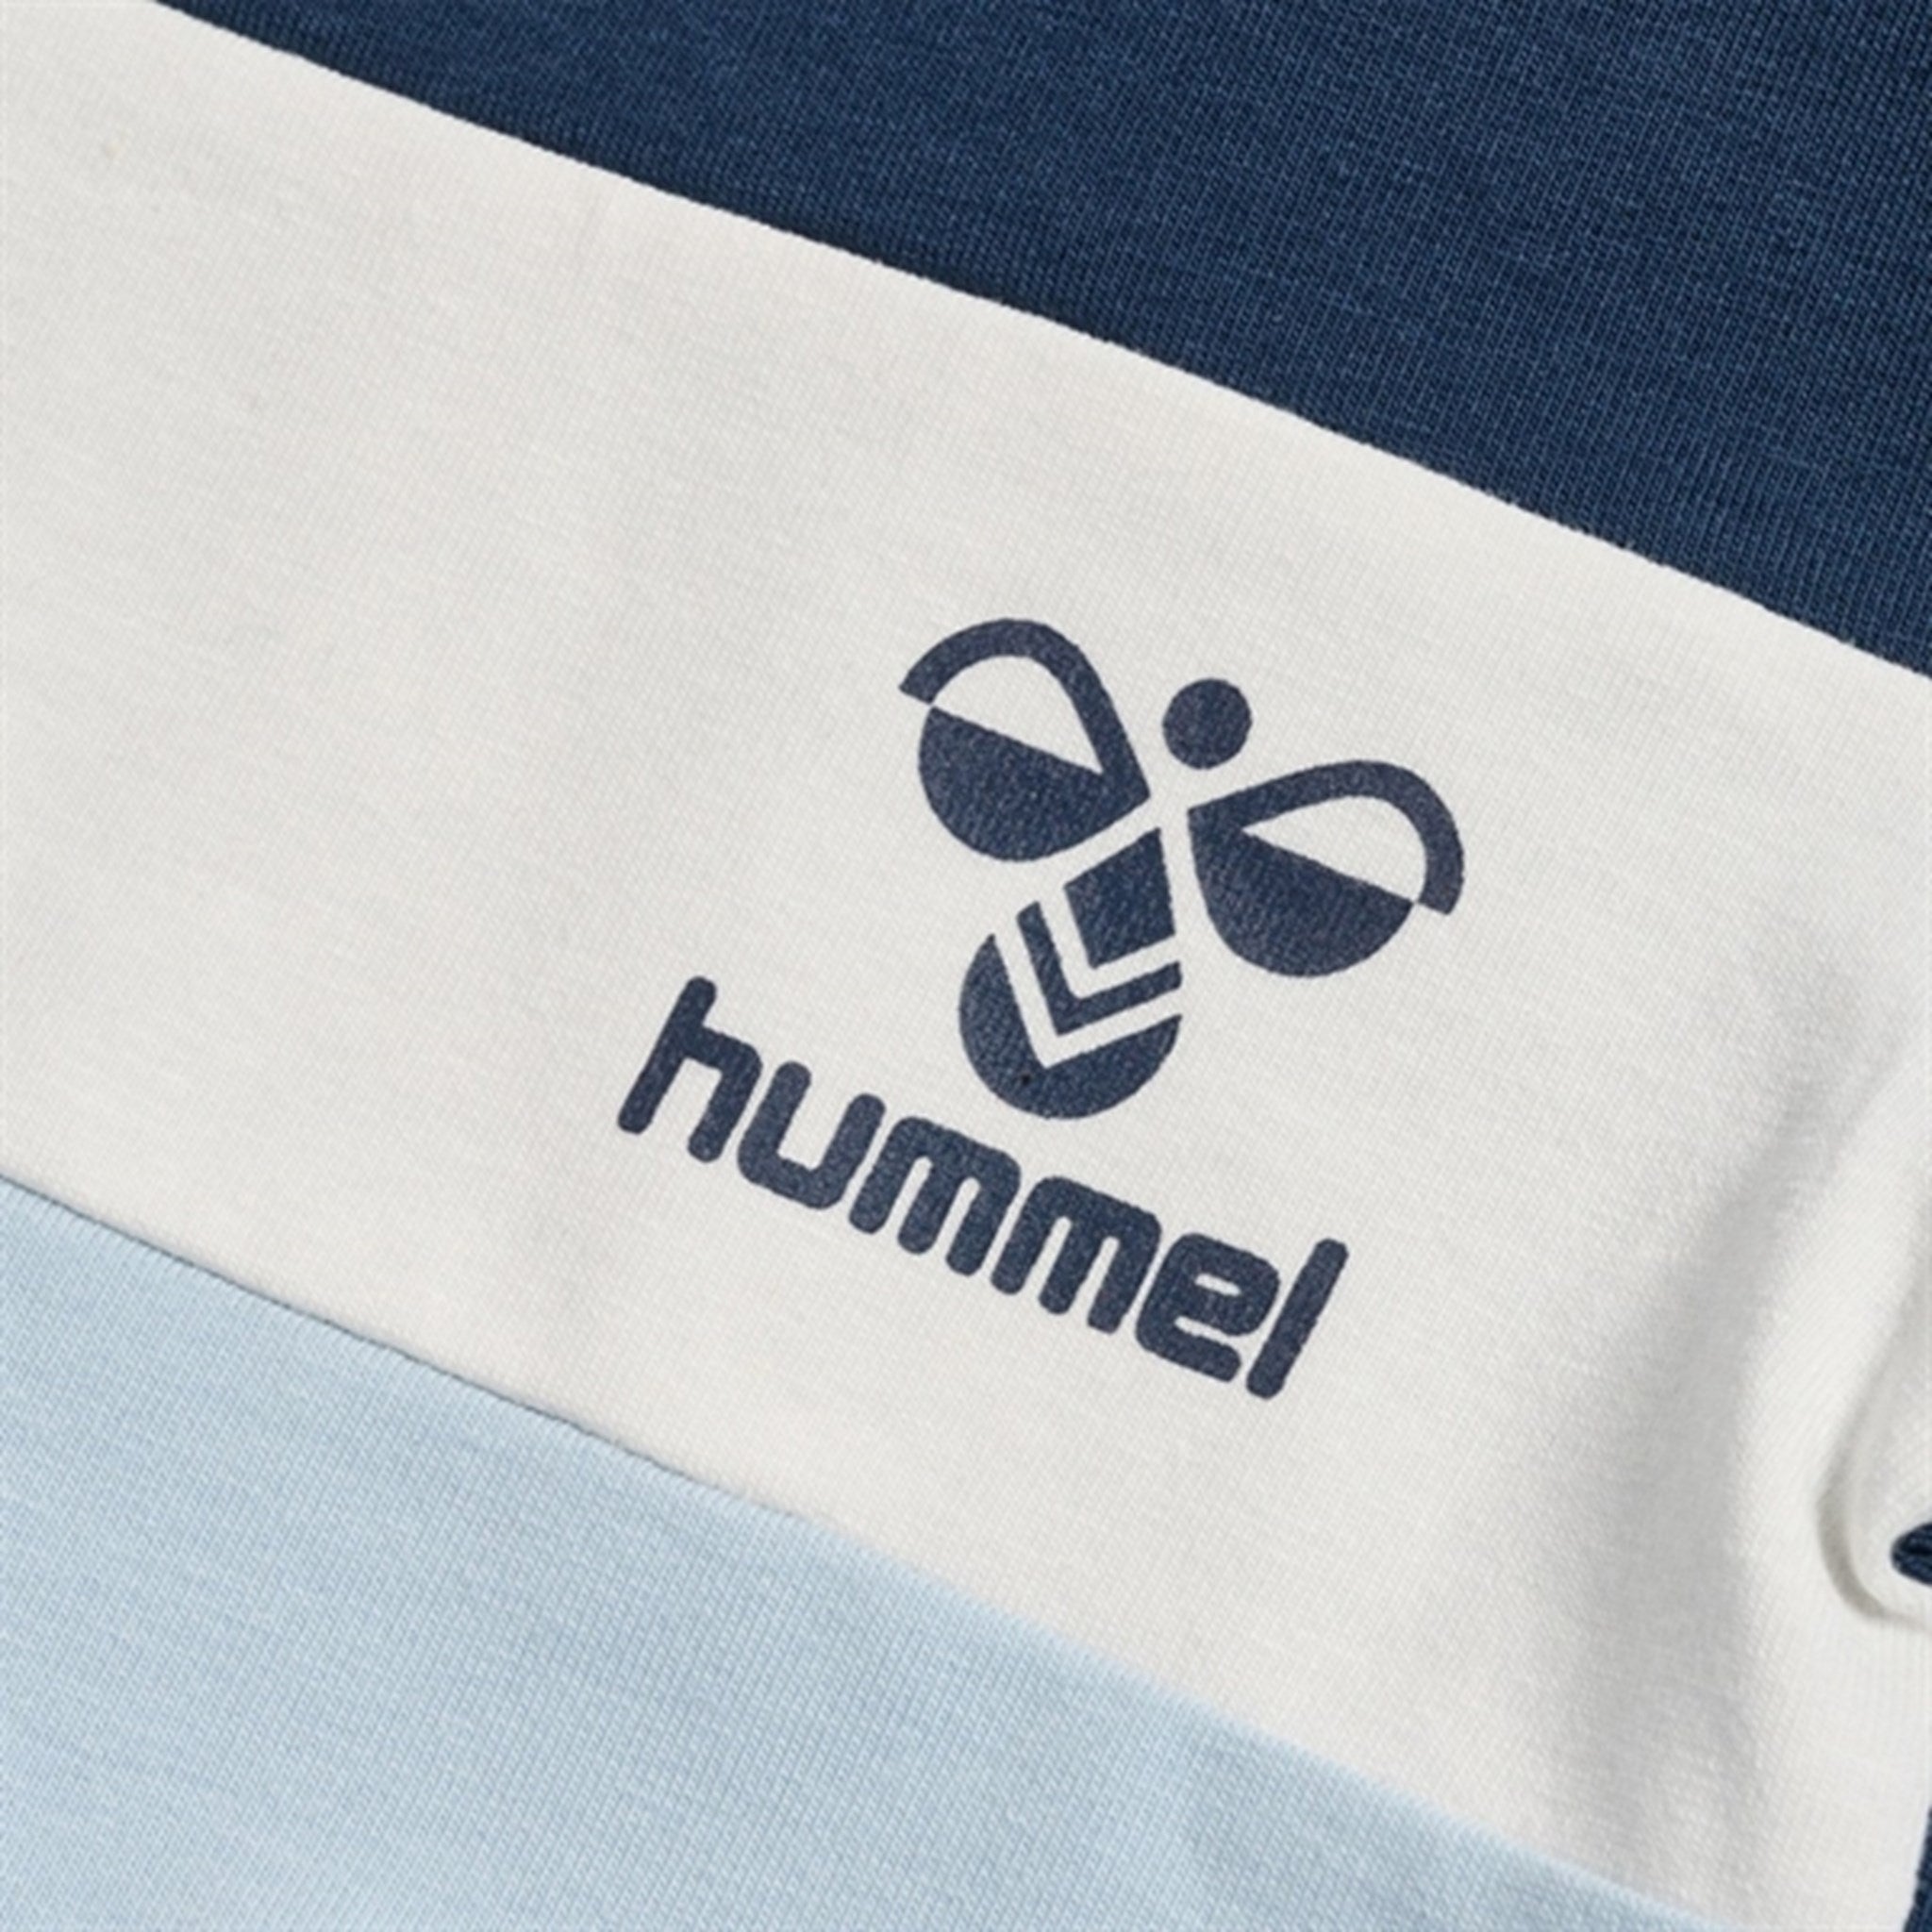 Hummel Dress Blues Azur Block Body S/S 2